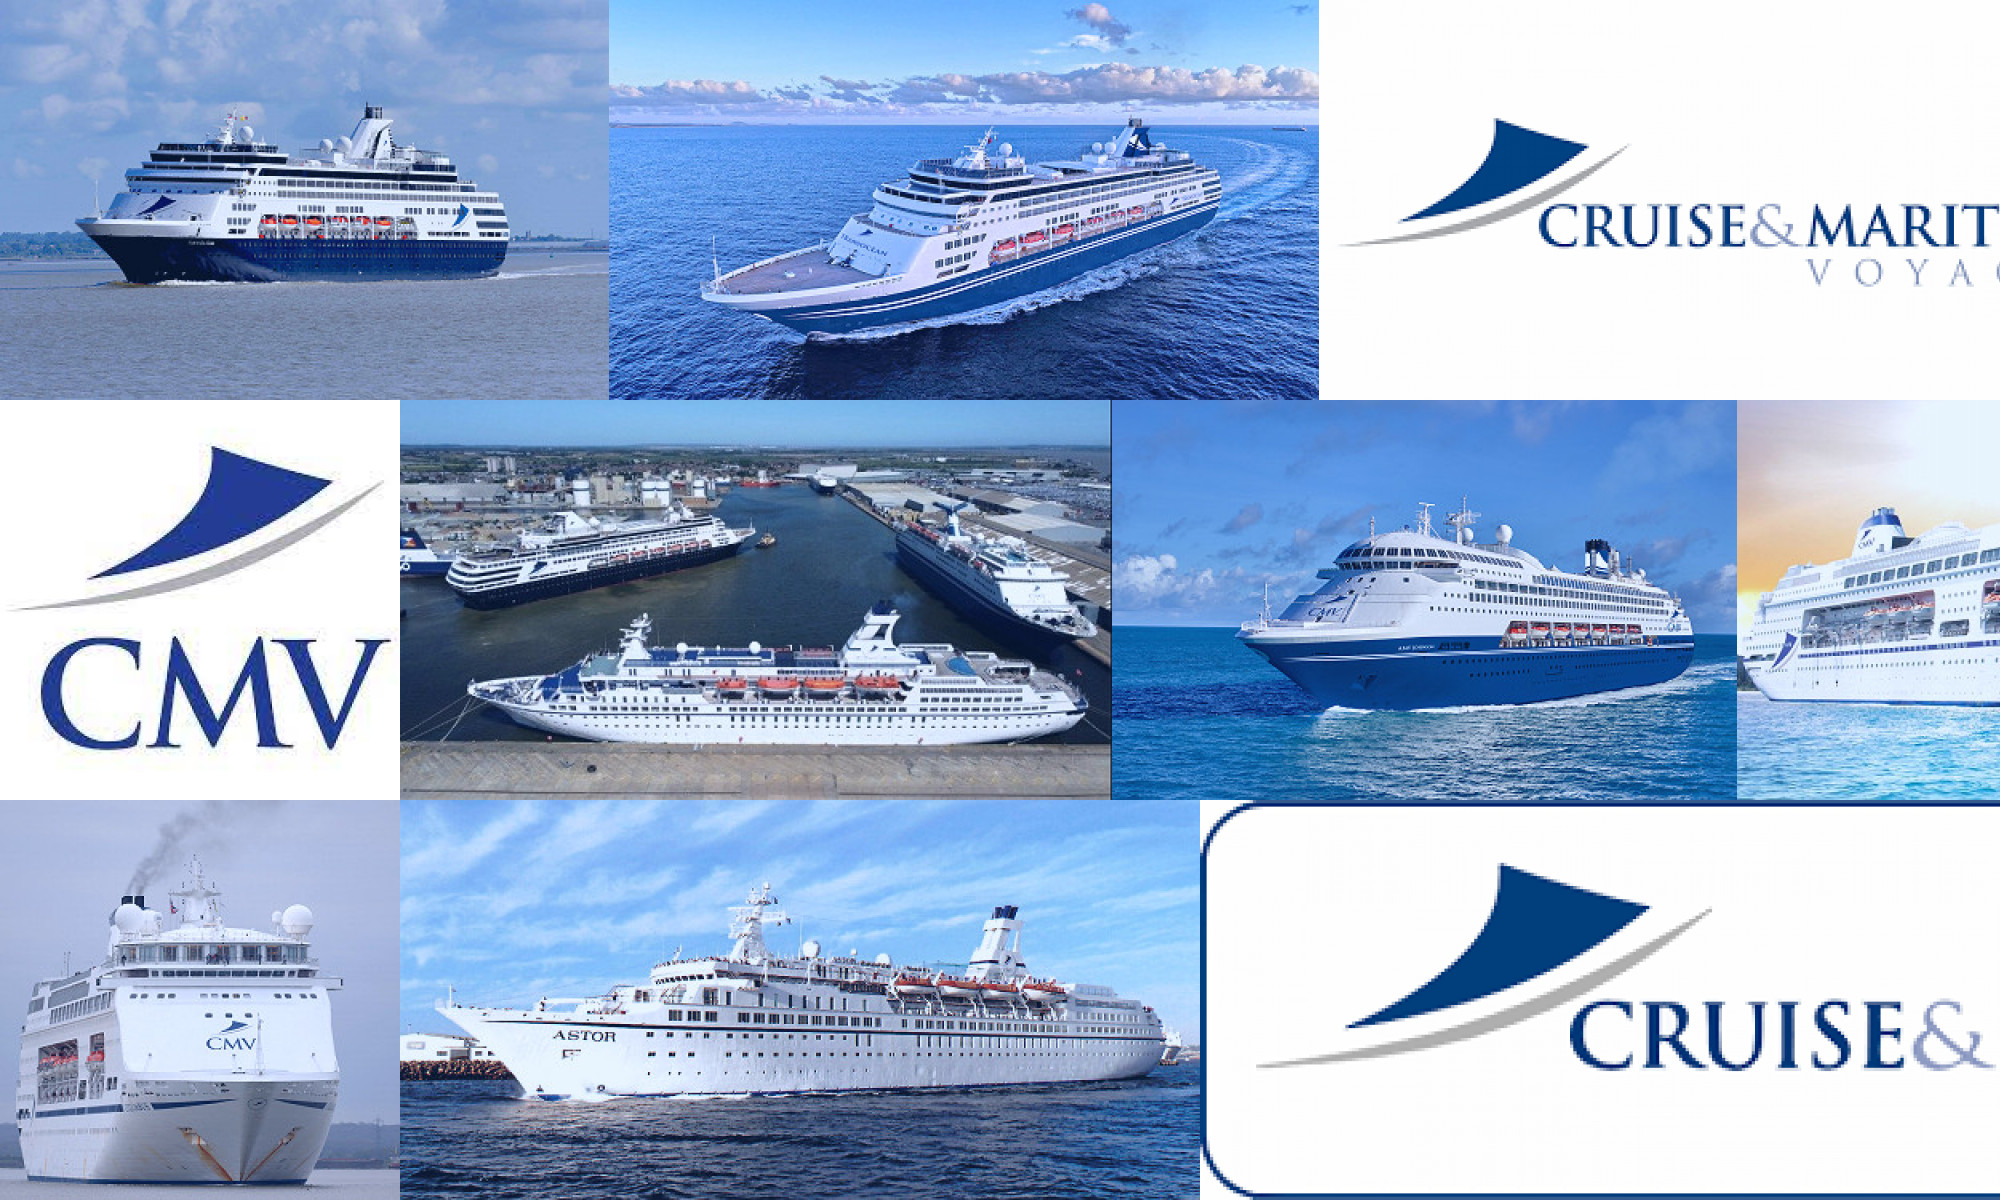 cruise & maritime voyages